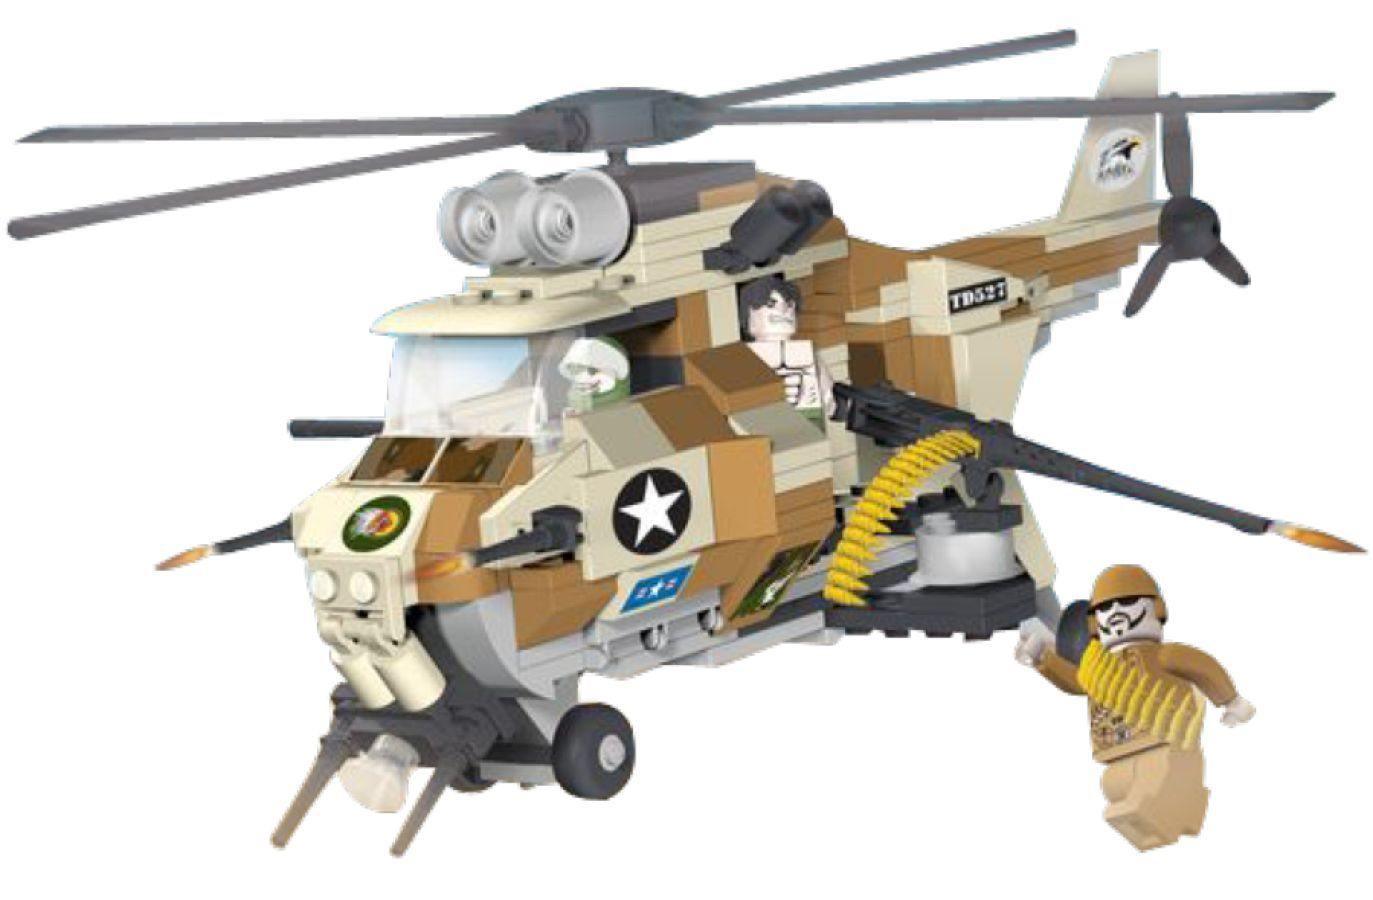 COB2350 Small Army - 250 Piece Desert Hawk Military Helicopter Construction Set - Cobi - Titan Pop Culture